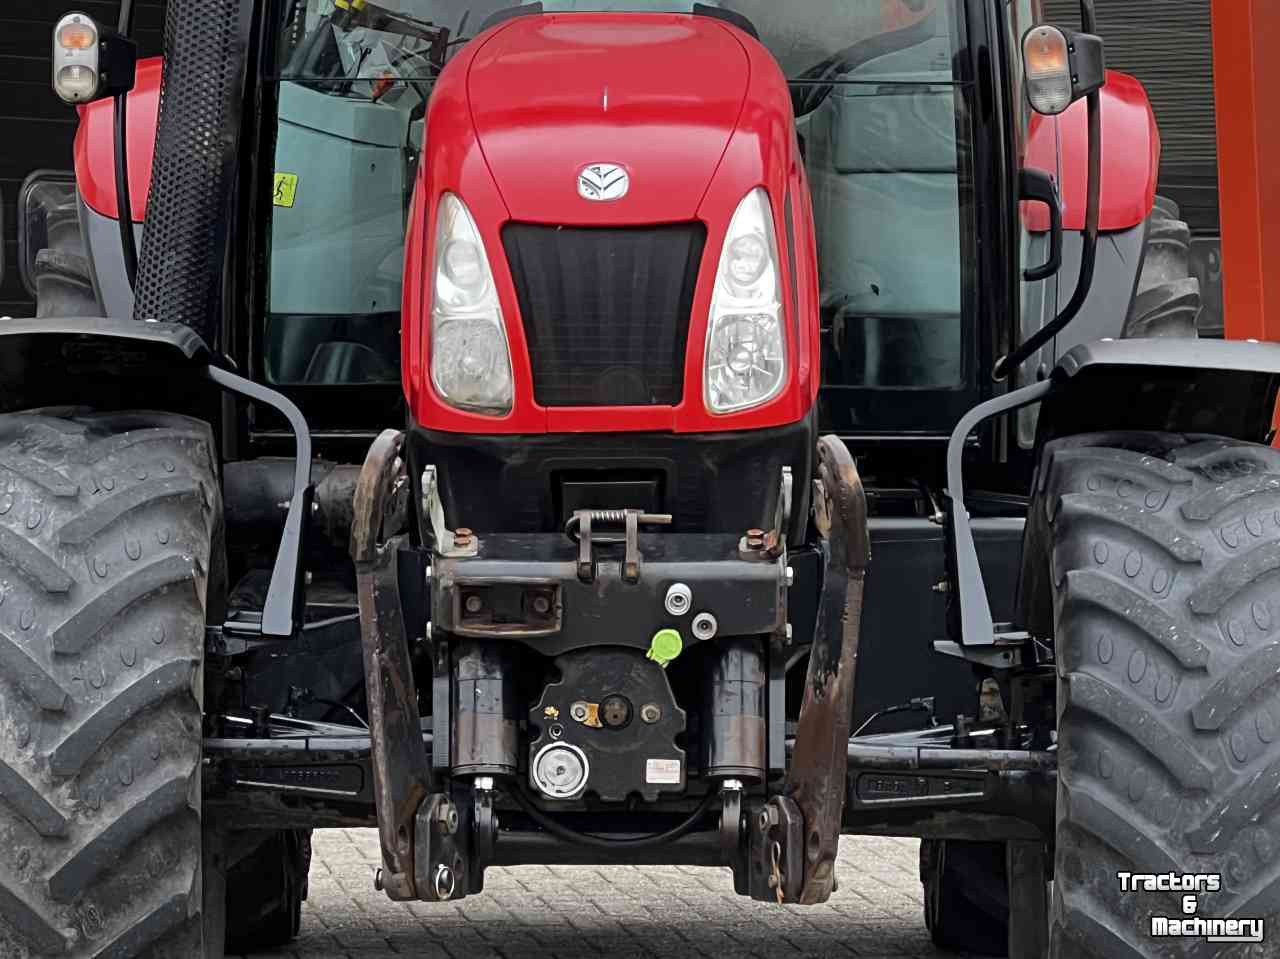 Traktoren New Holland T 6020EC Kruip Airco Fronthef+pto